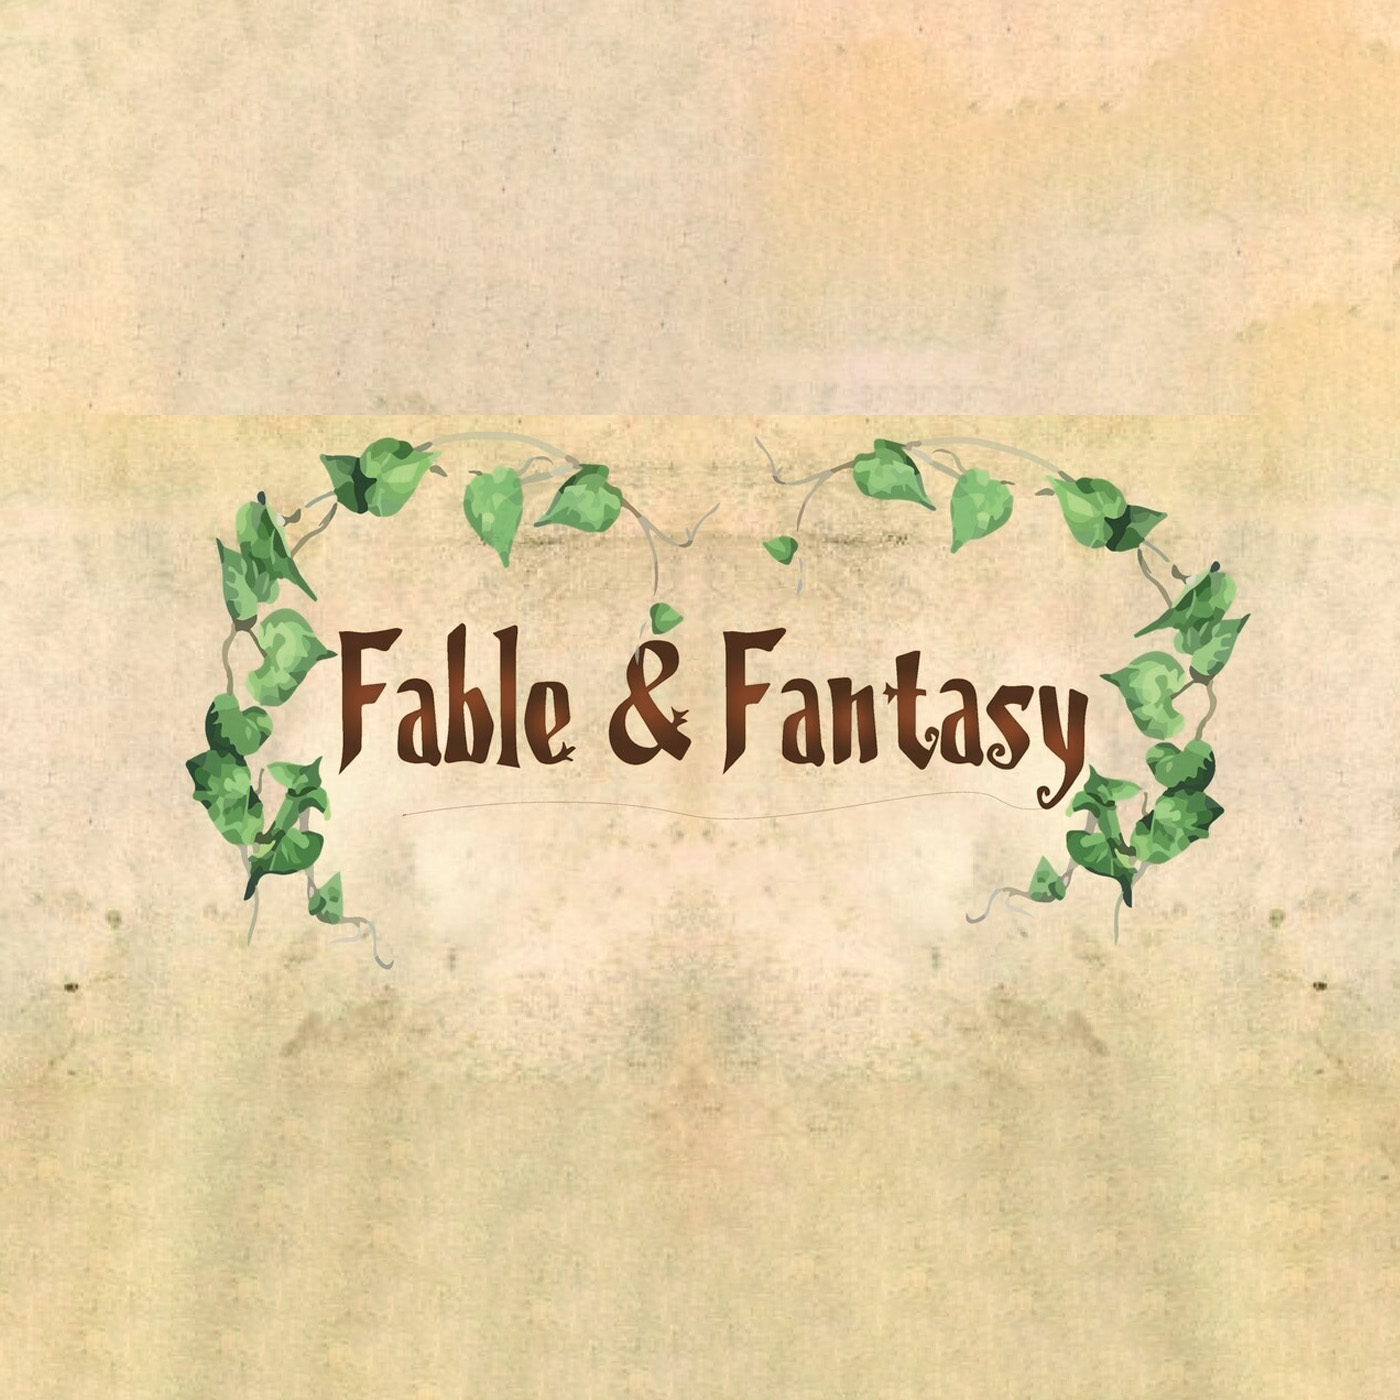 Fable & Fantasy